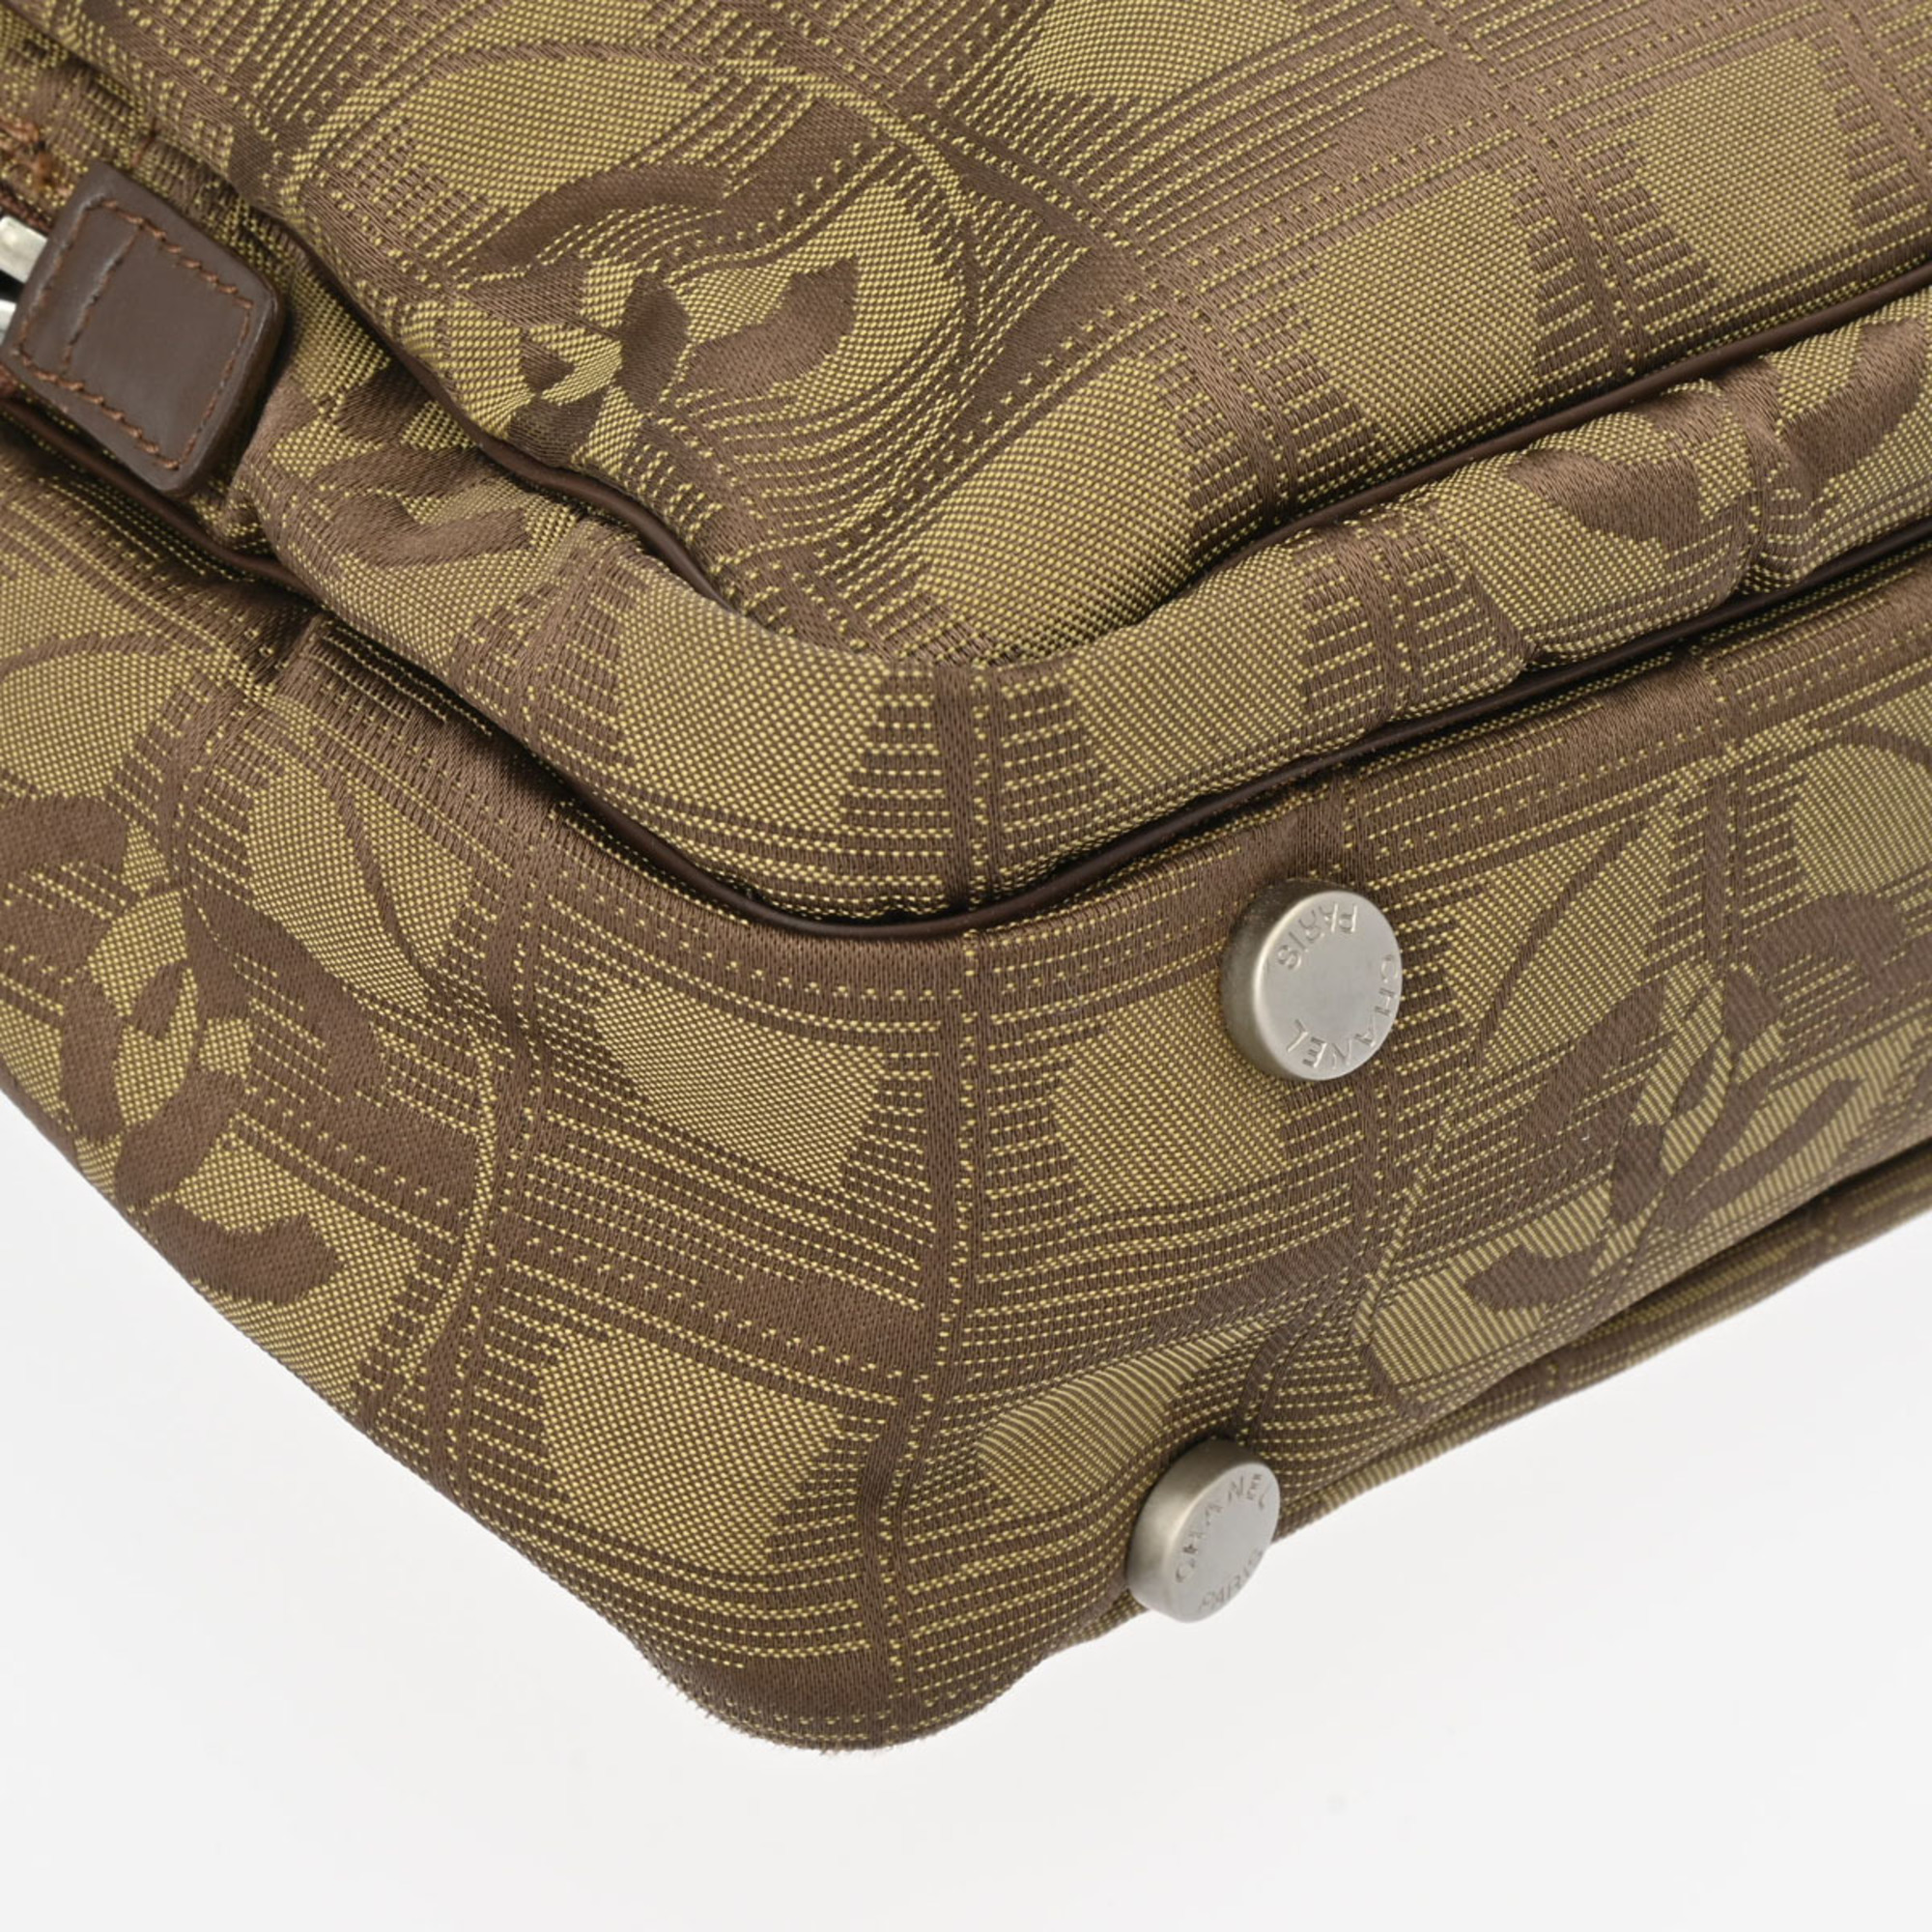 CHANEL New Travel Line Khaki - Women's Nylon Handbag